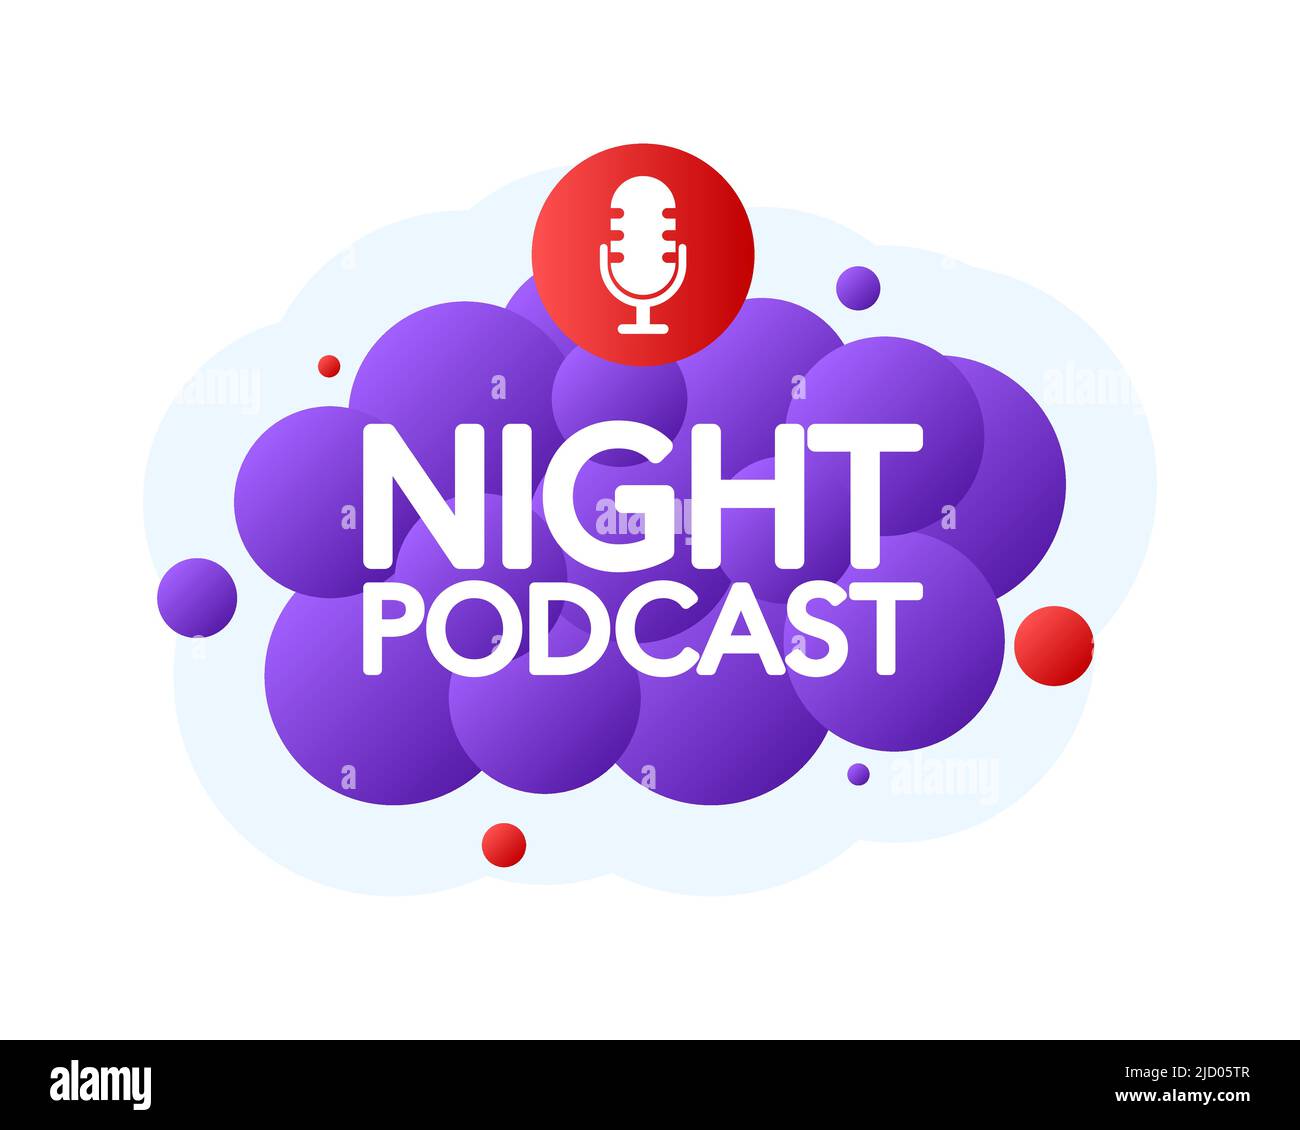 Night Podcast Bubble Banner, violettes Emblem-Etikett. Vektorgrafik. Stock Vektor